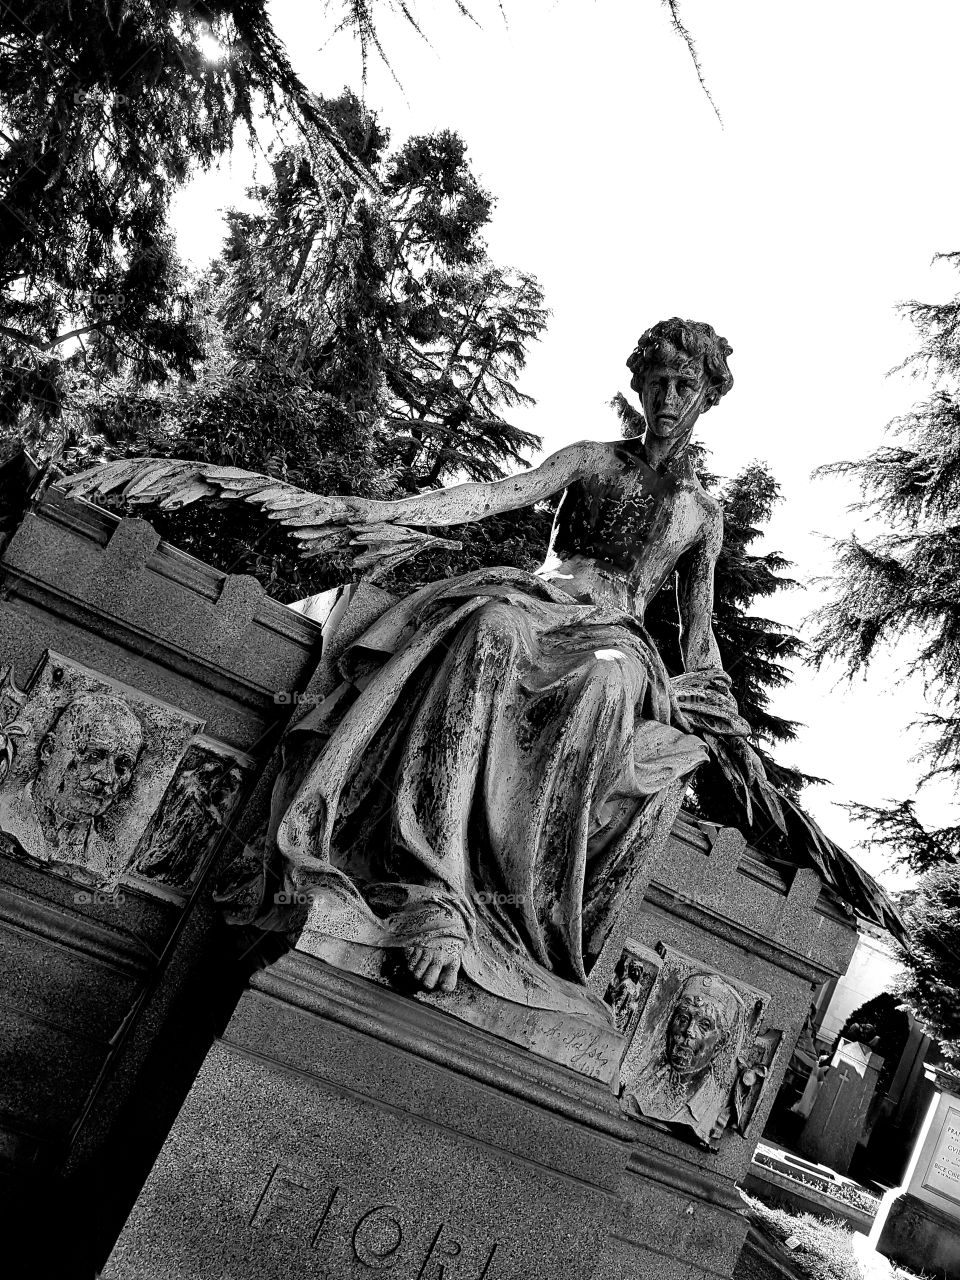 Cimitero Monumentale in Milan, Italy.